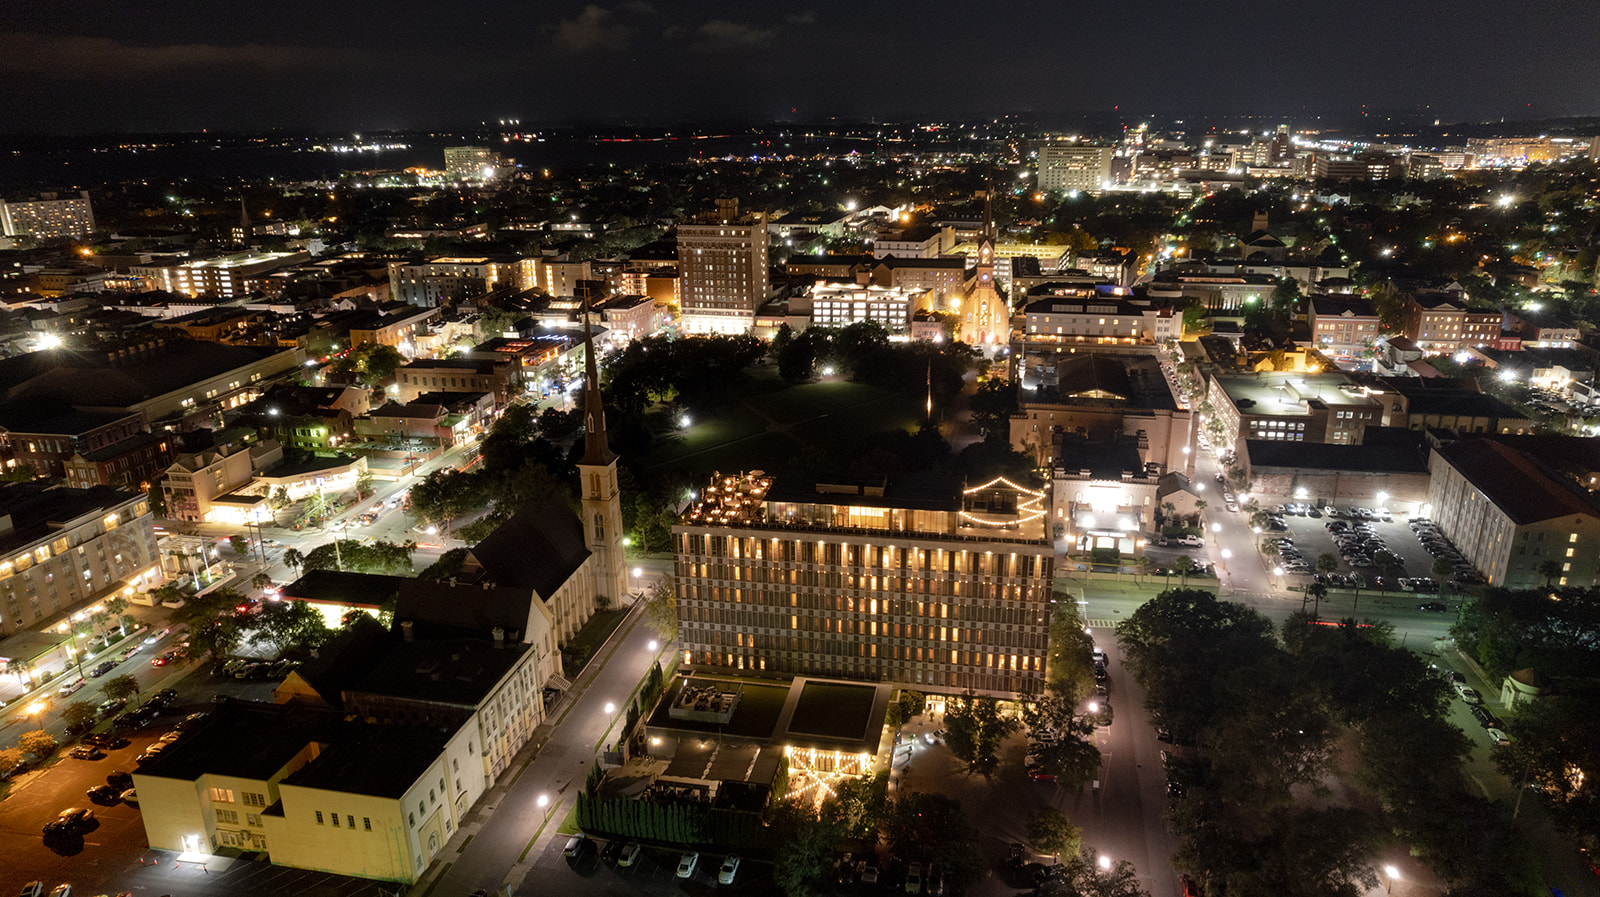 Aerial photo of Dewberry hotel and Charleston at night